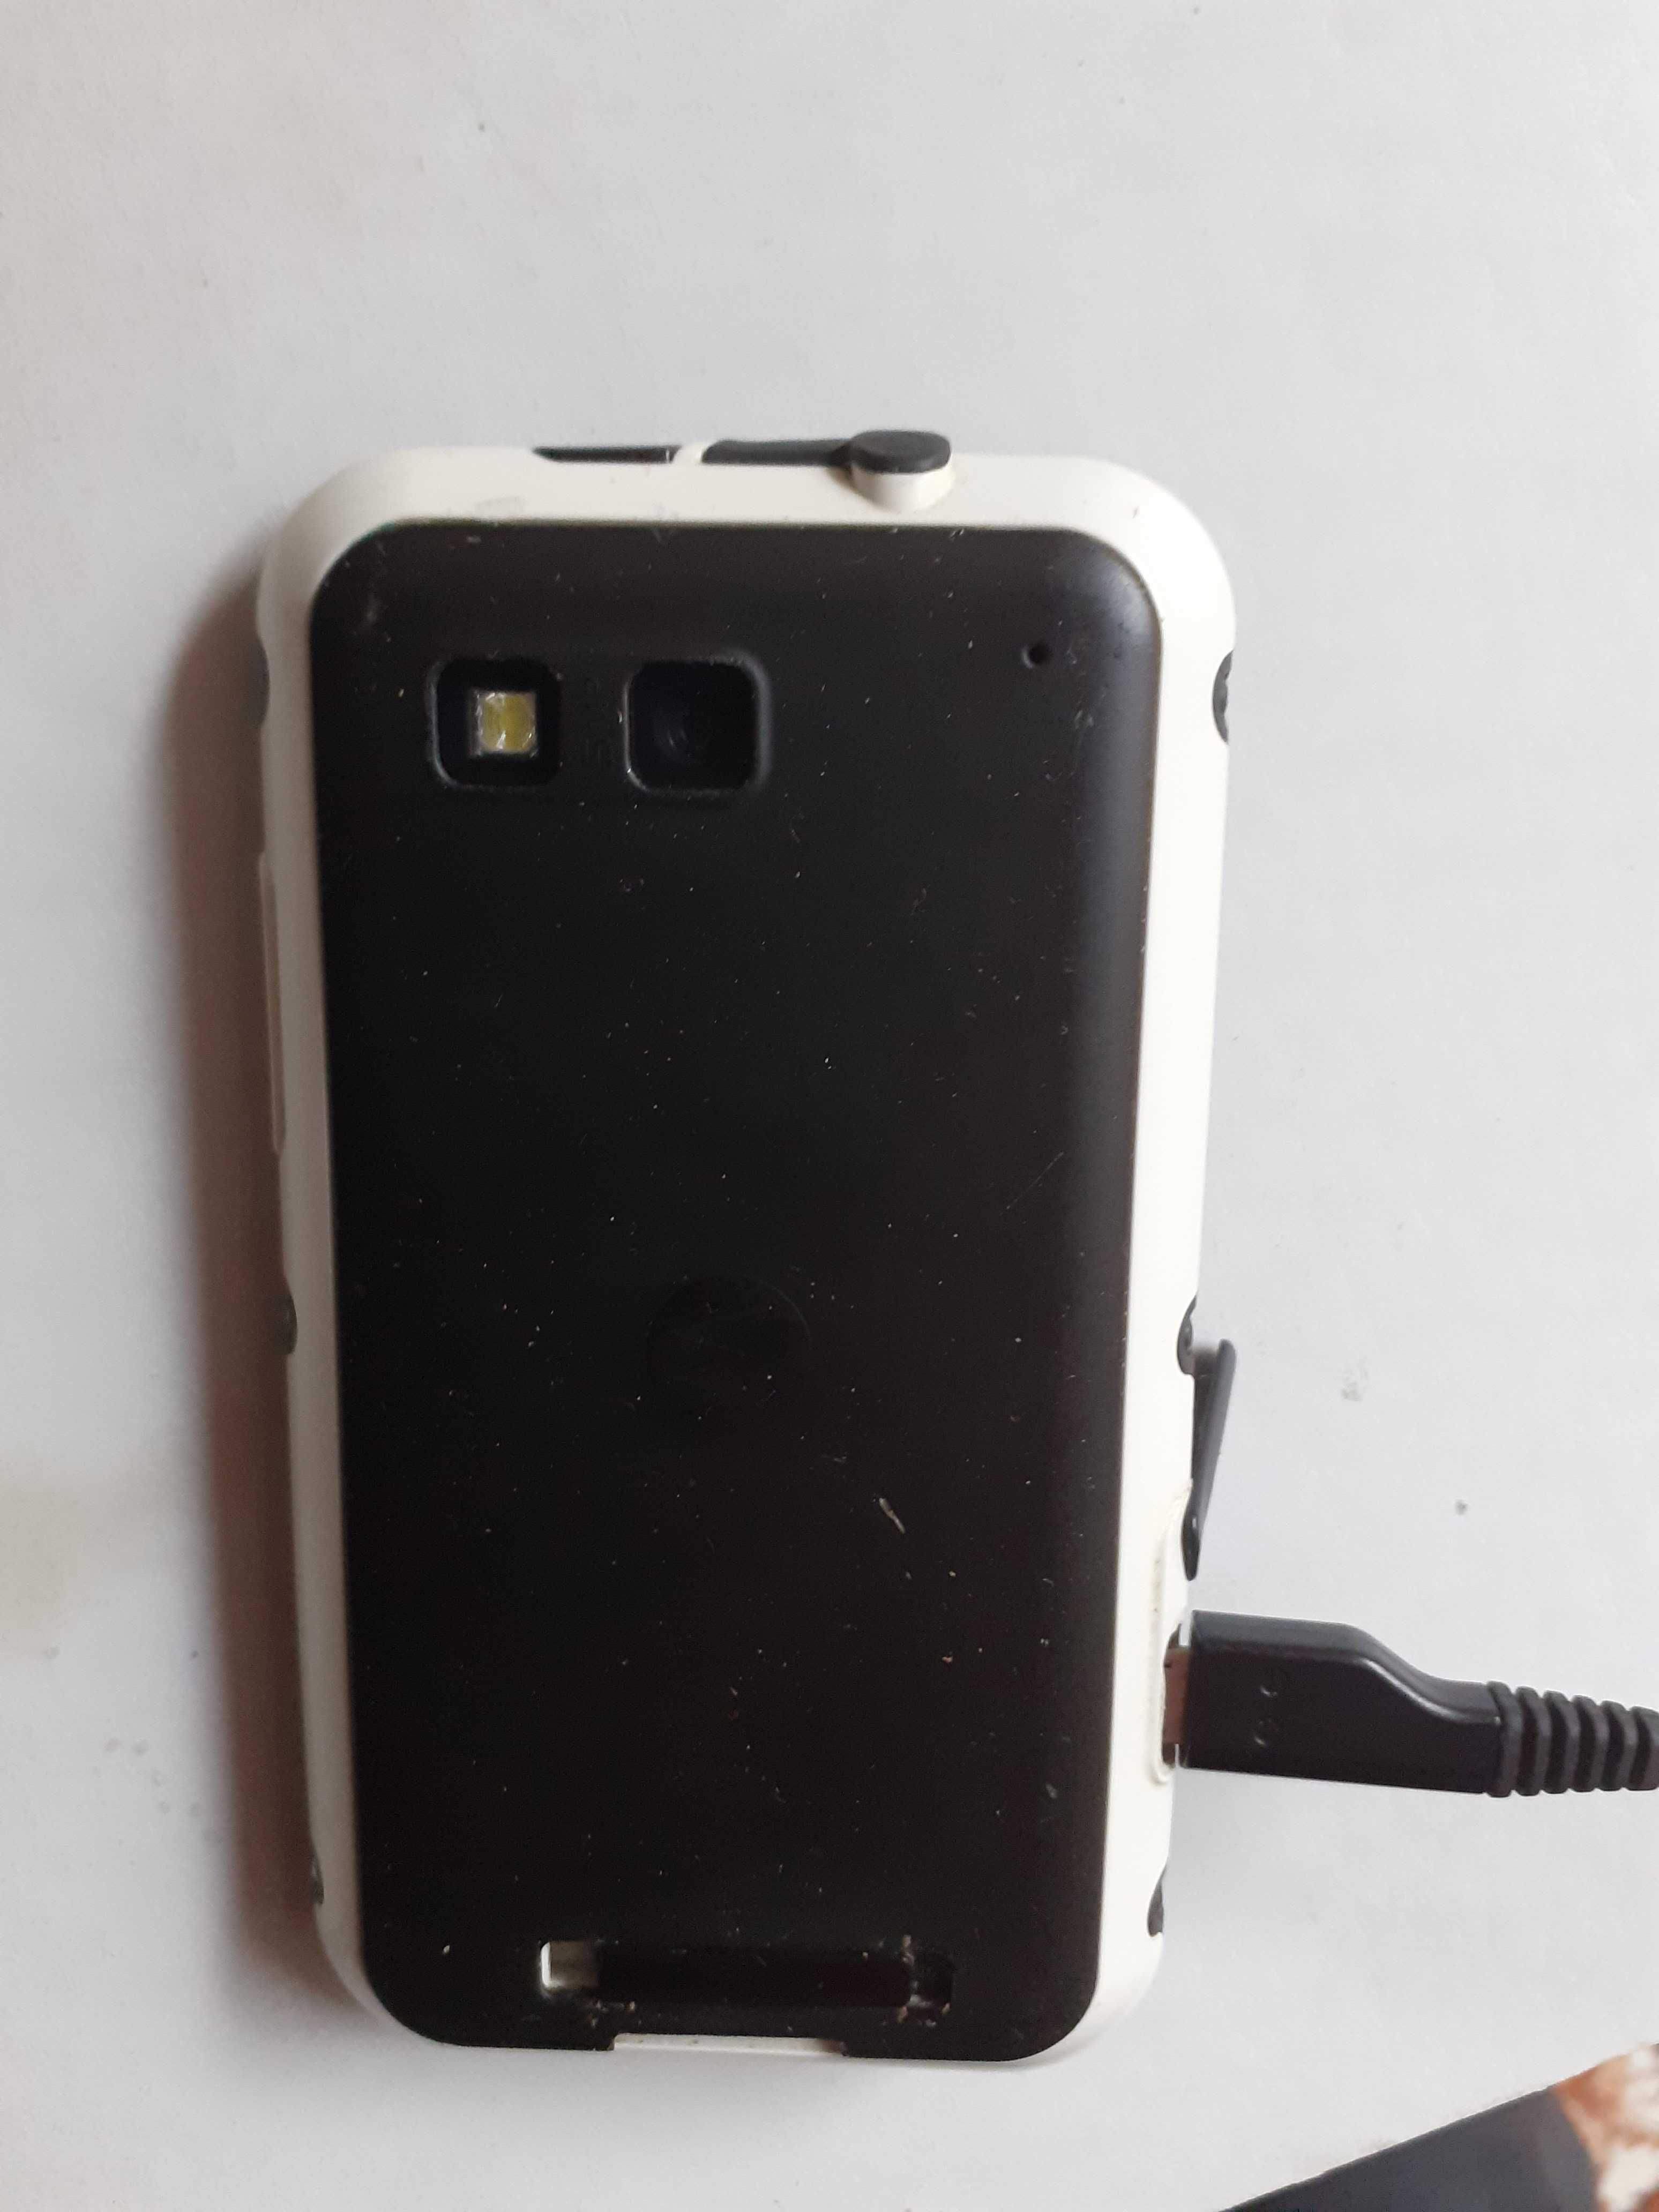 Motorola Defy - Mini